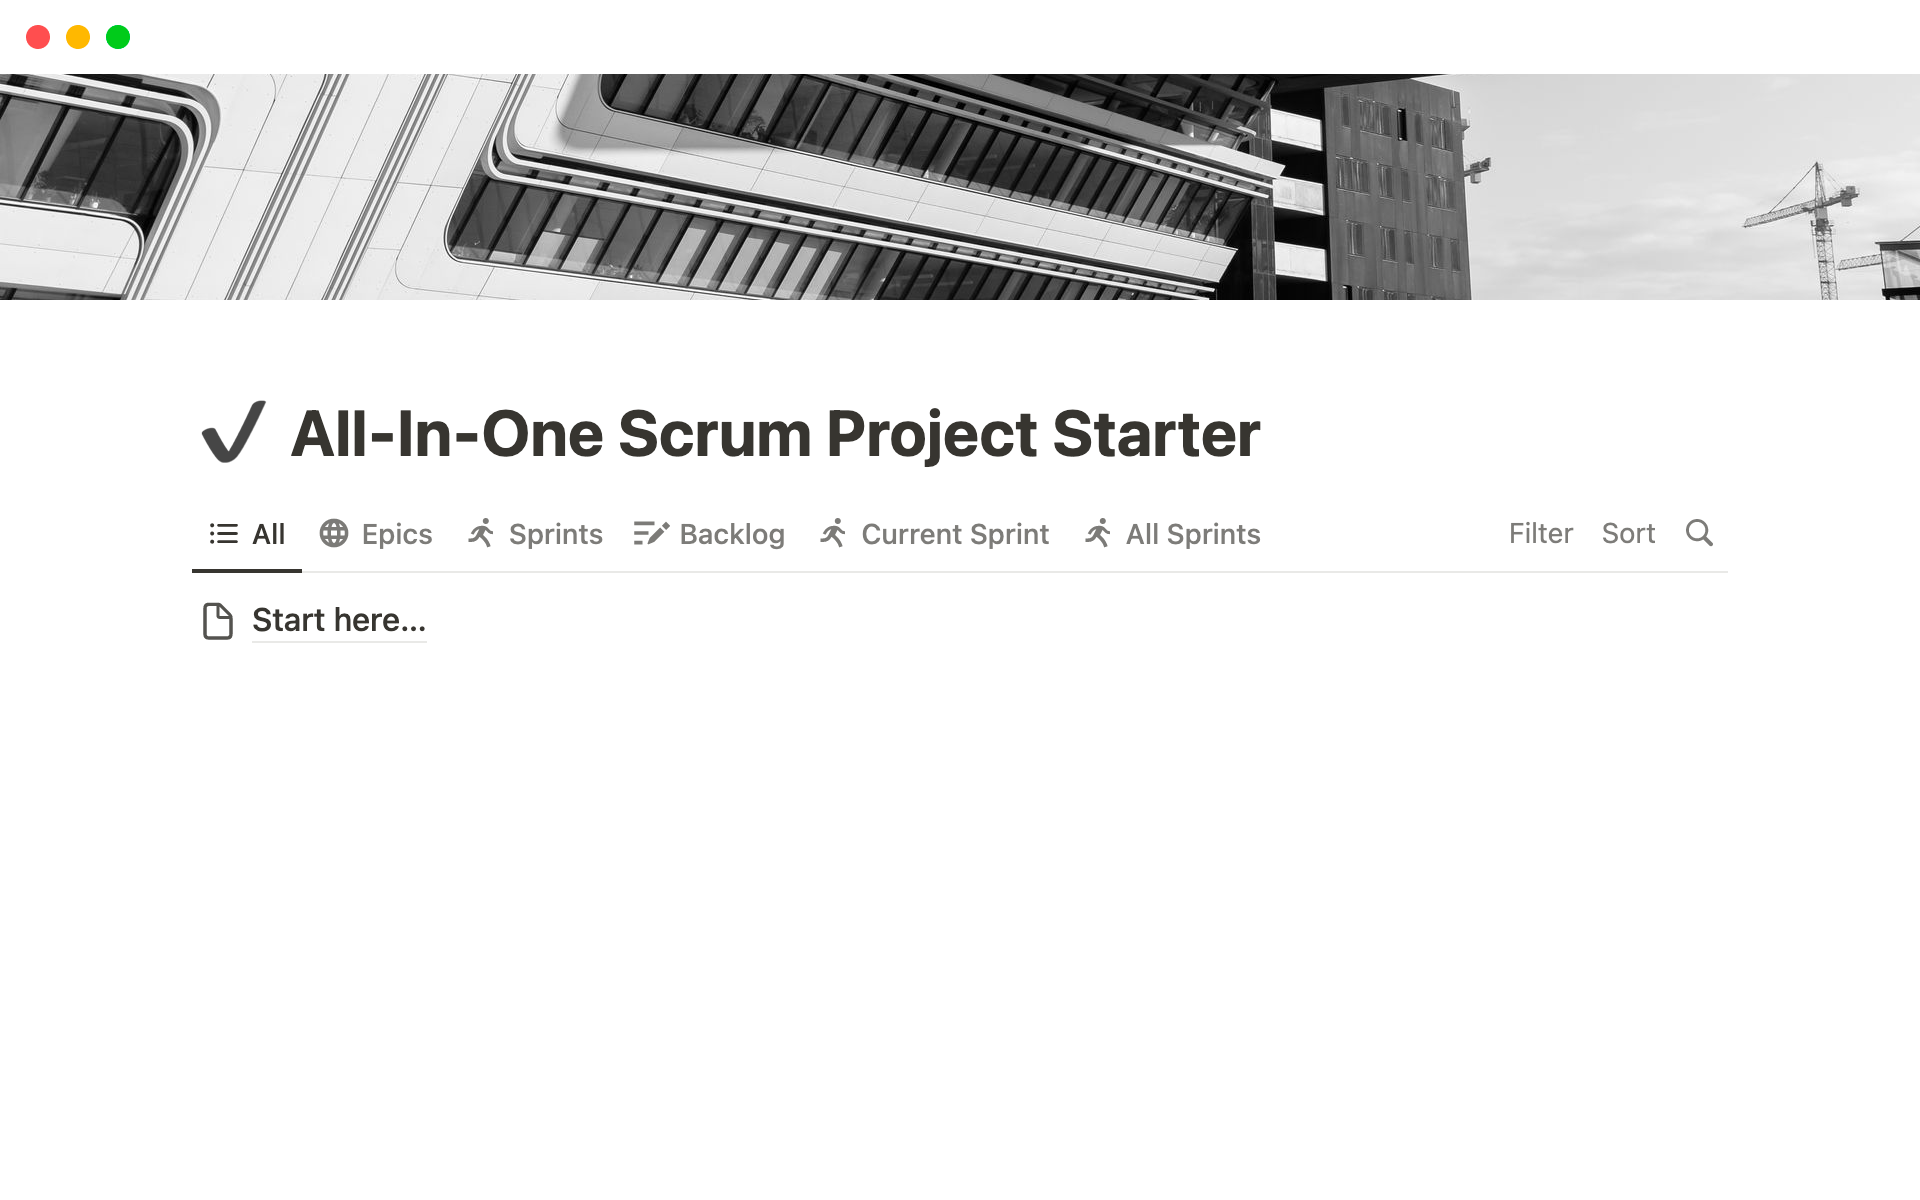 Vista previa de una plantilla para All-in-One Scrum Starter Pack